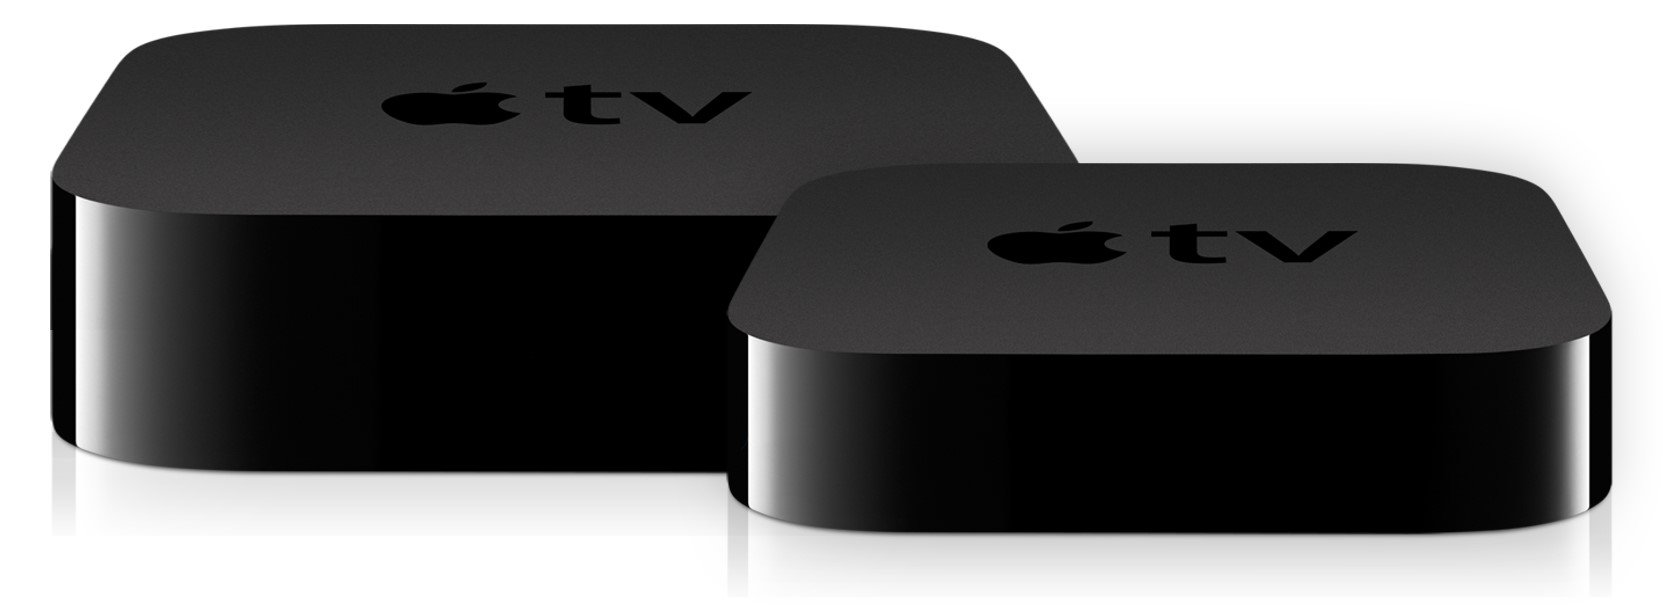 Apple TV 4 concept